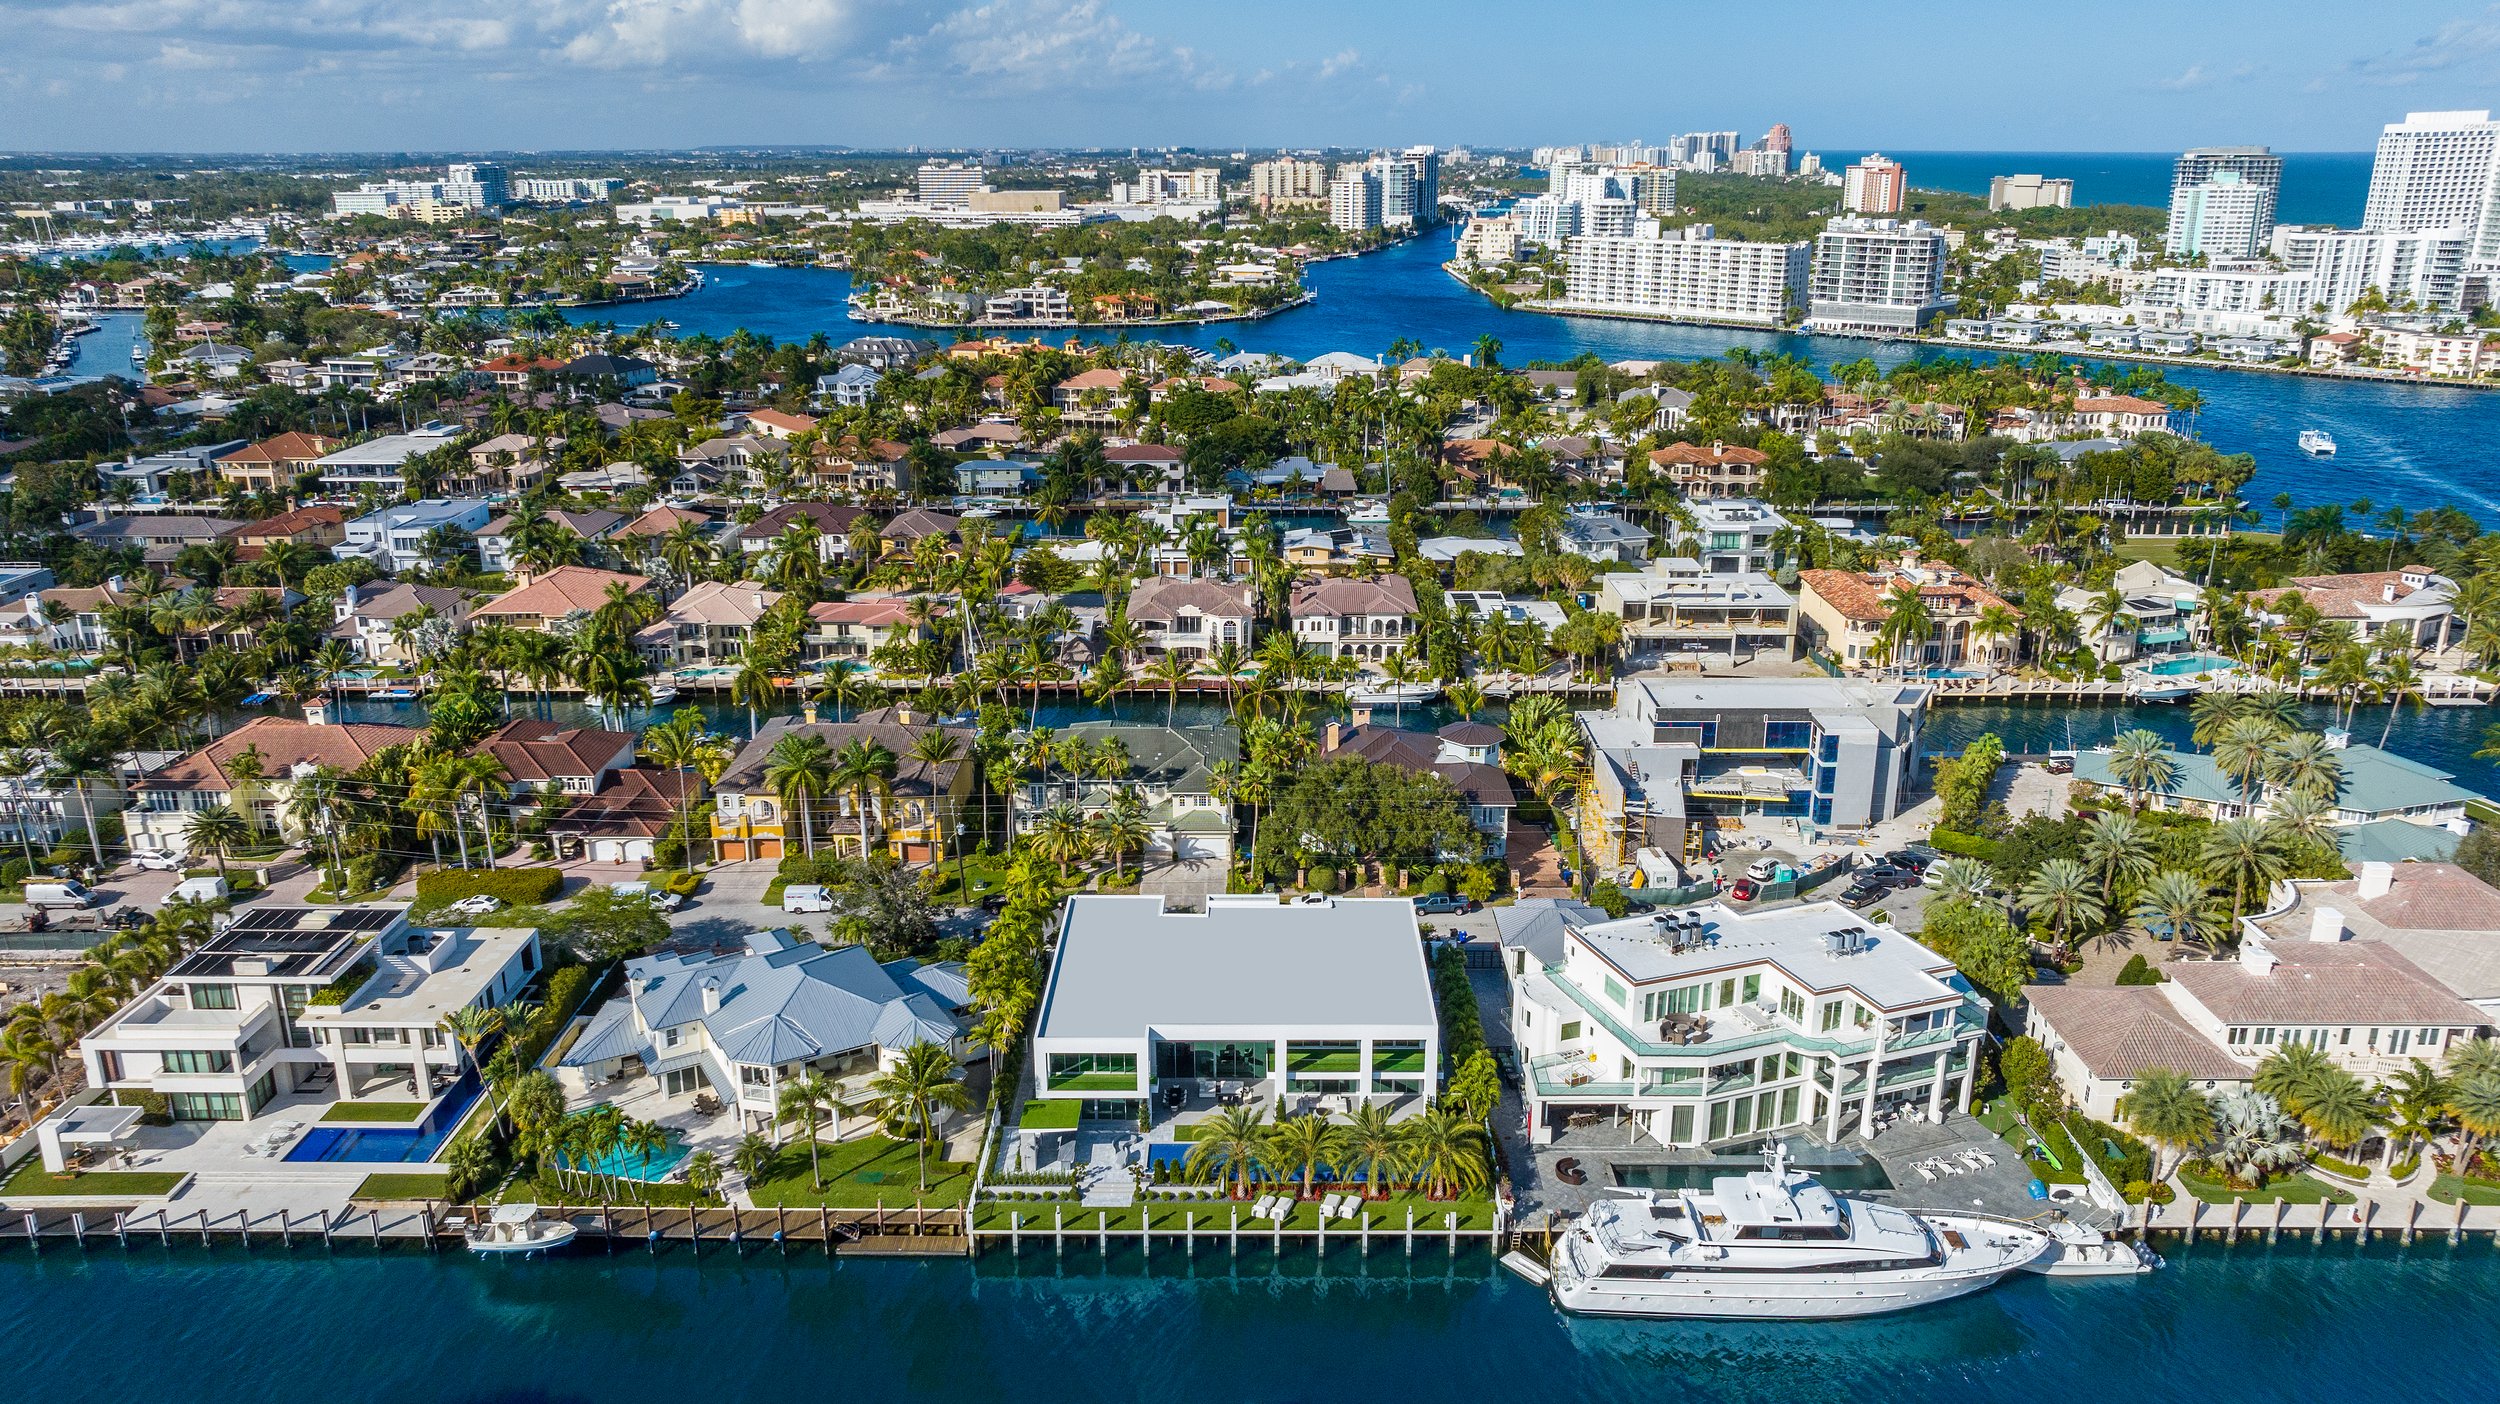 Fort Lauderdale Waterfront Sells For Las Olas Isle Record $14.75 Million 6.jpg